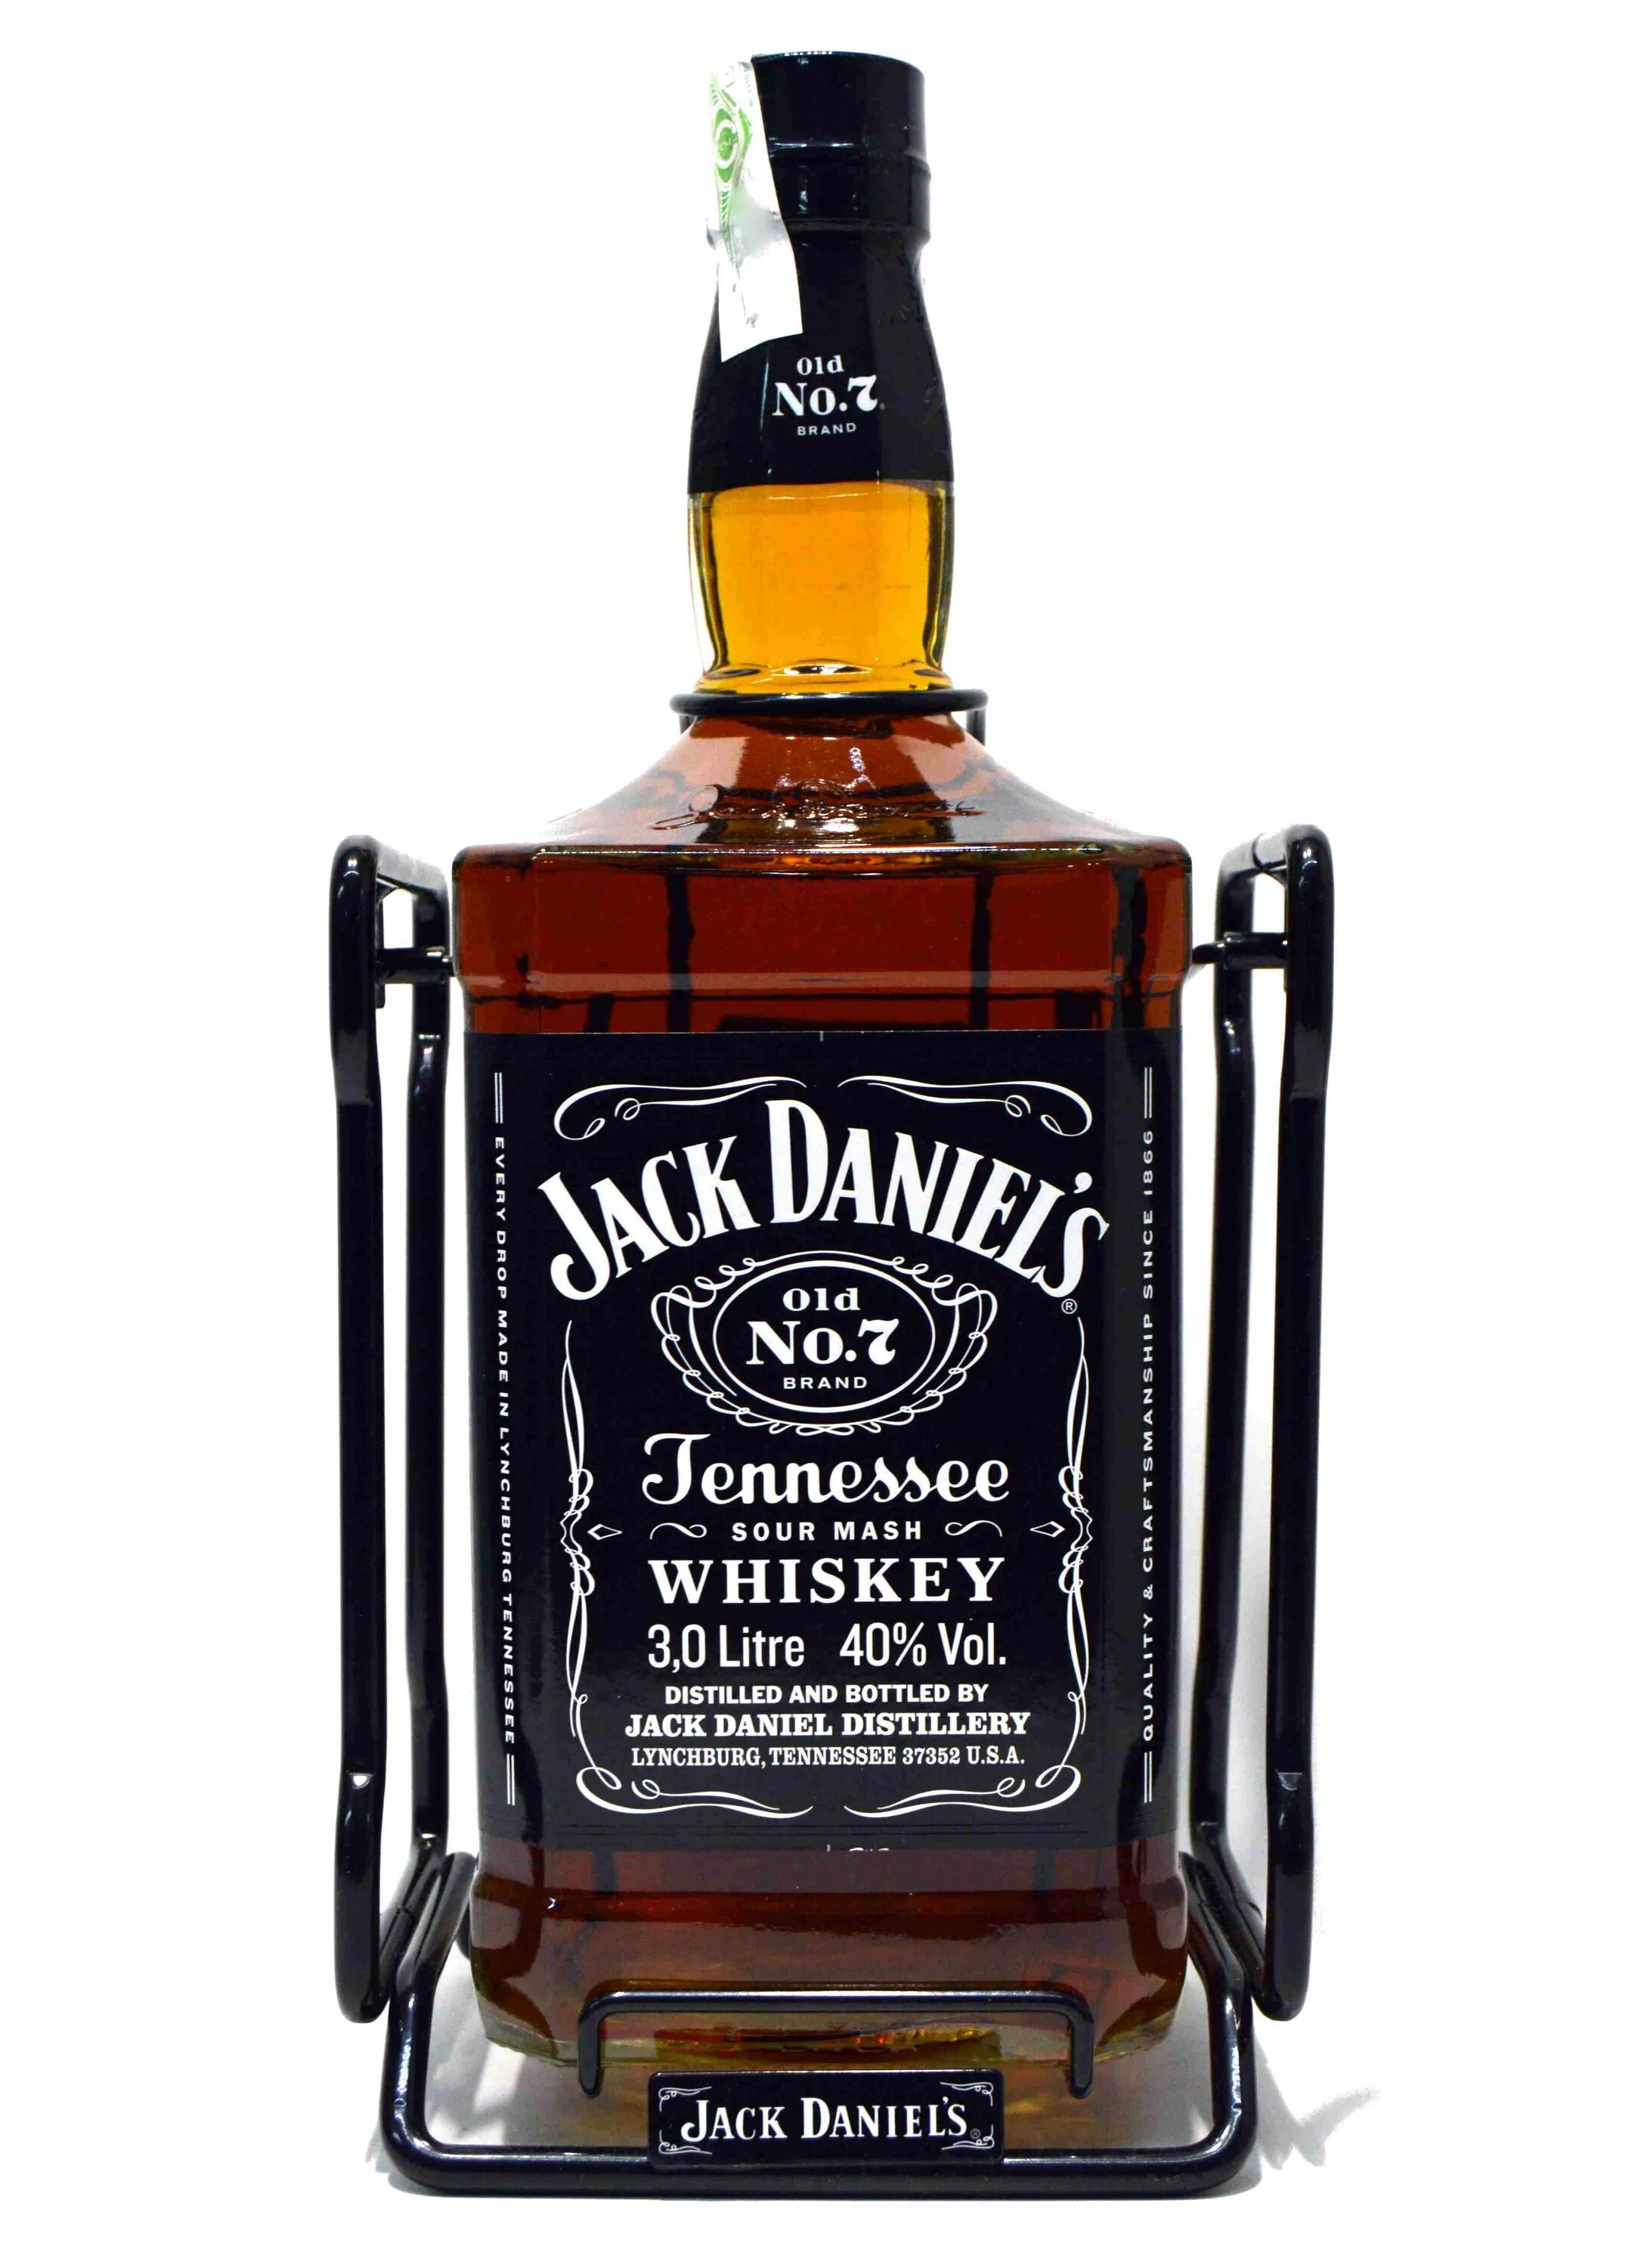 Джек дэниэлс это. Виски Джек Дэниэлс. Дэниэлс Джек Дэниэлс виски. Джек Дэниэлс виски 0.1. Джек Daniels виски.